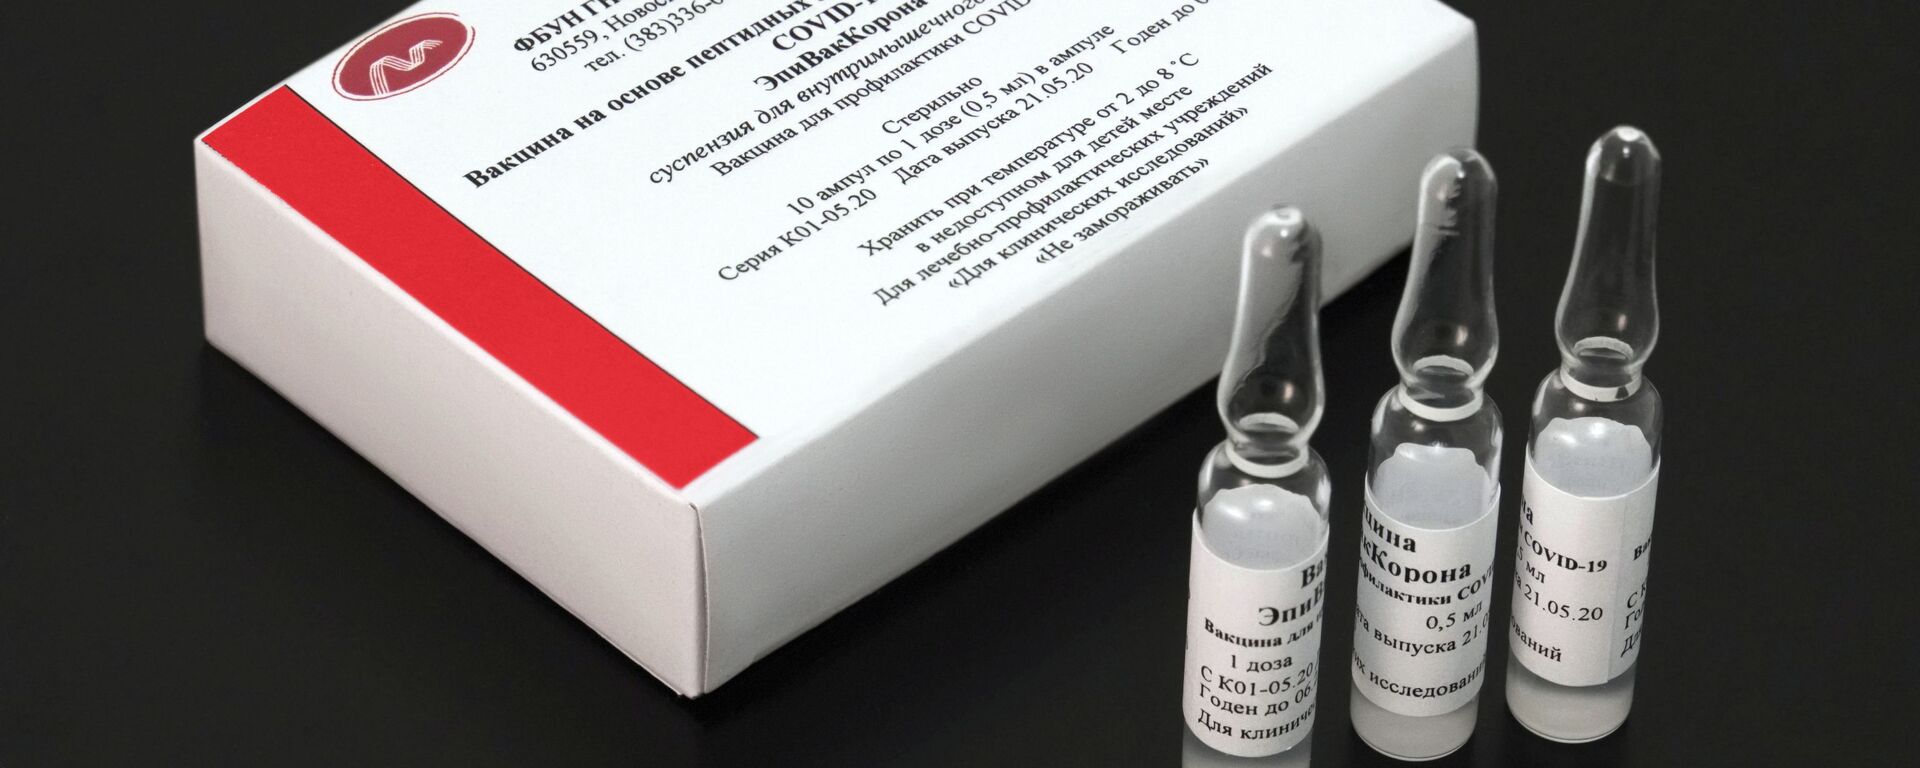 La vacuna anti-COVID-19 'EpiVacCorona' - Sputnik Mundo, 1920, 08.04.2021